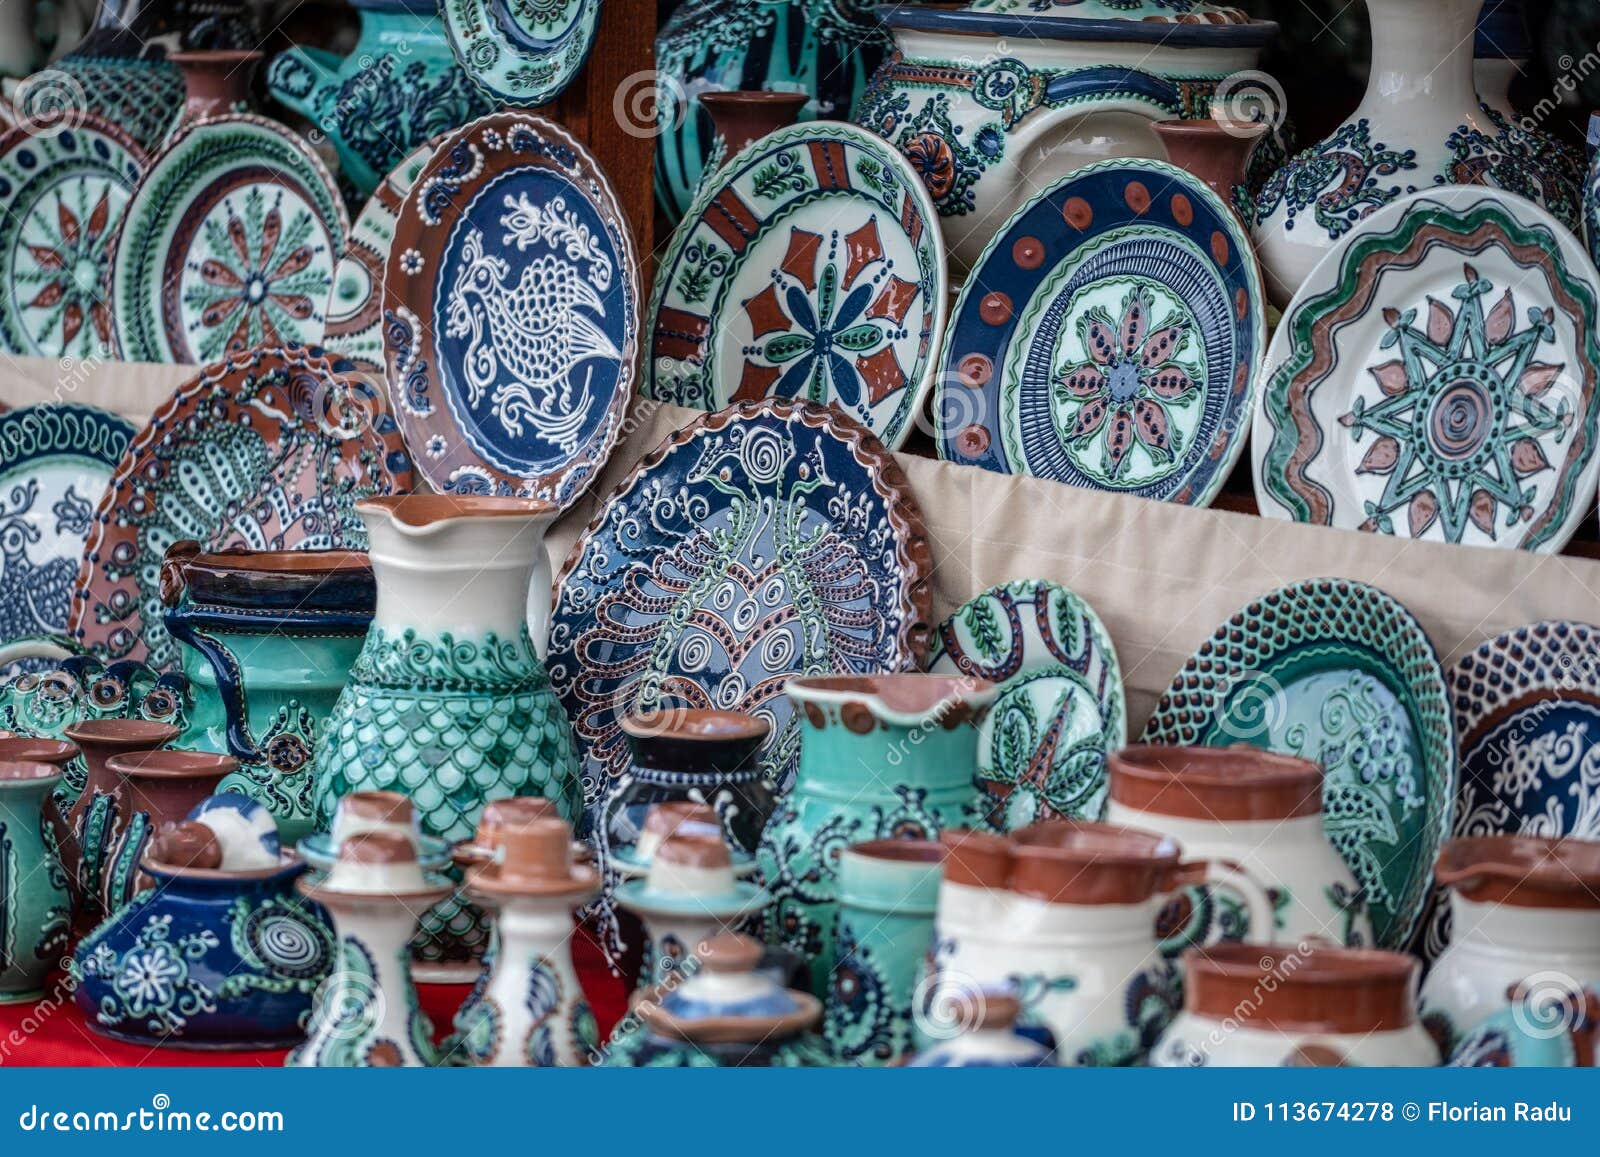 traditional horezu ceramics